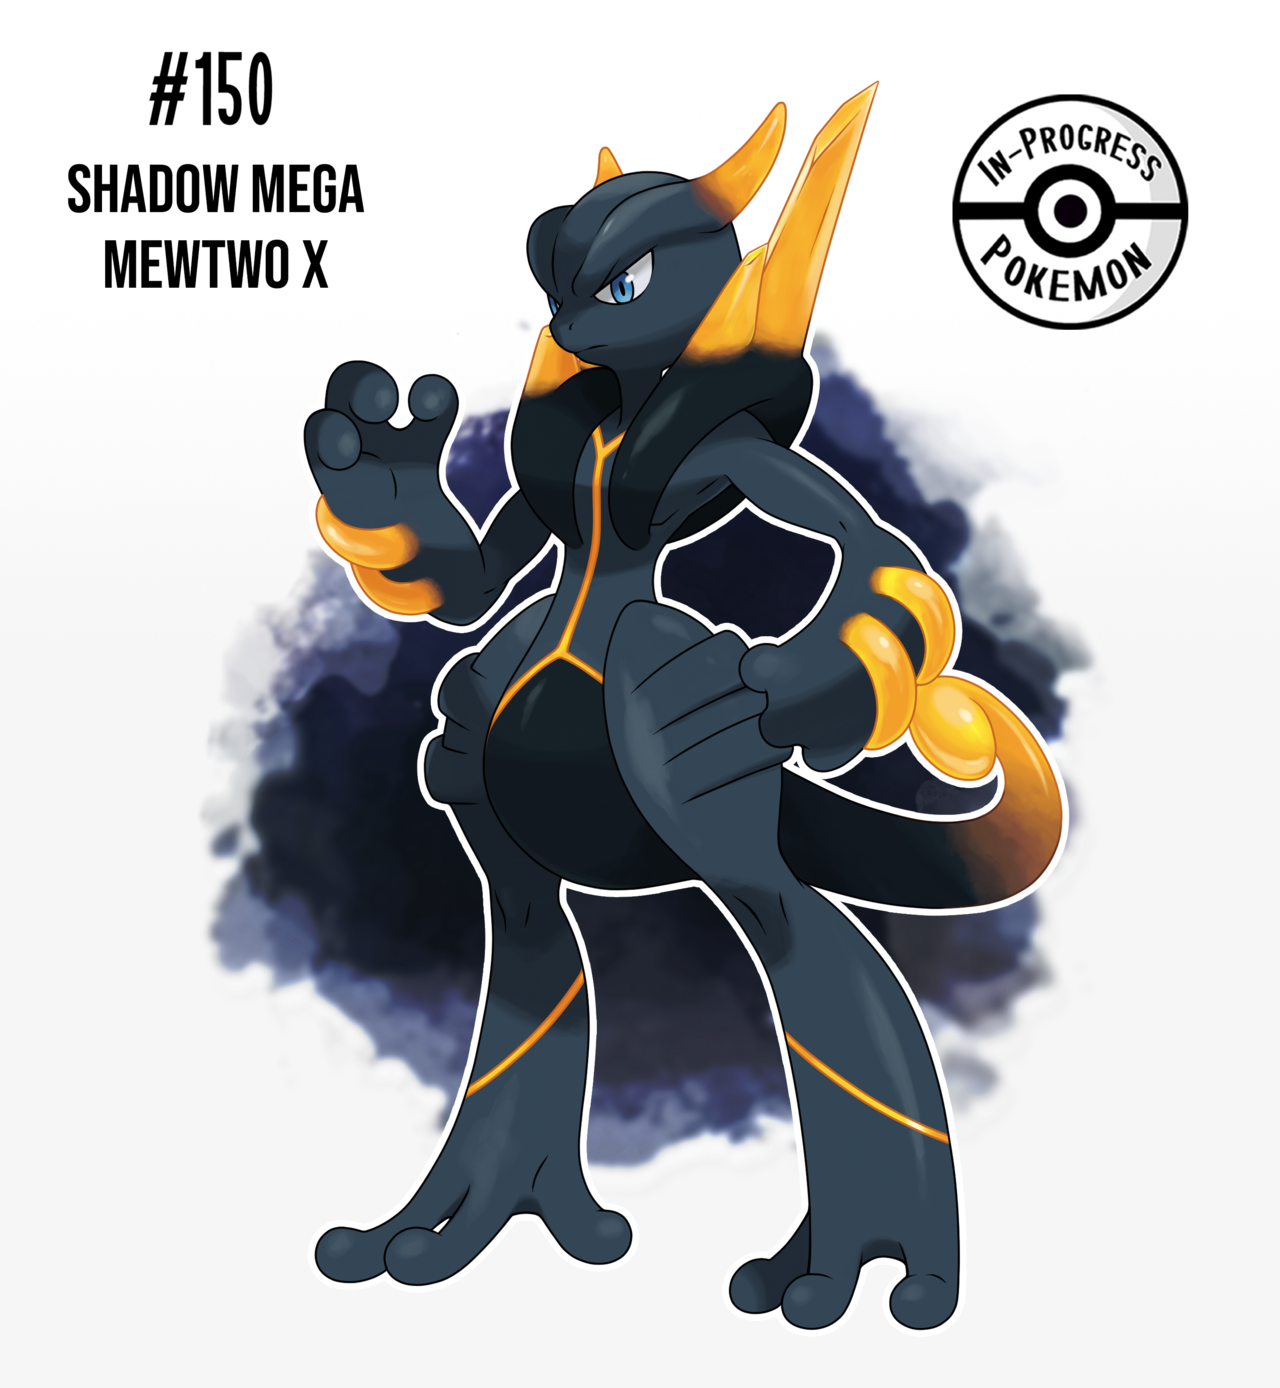 Charizard-Mega Charizard Y, In-Progress Pokemon Wiki